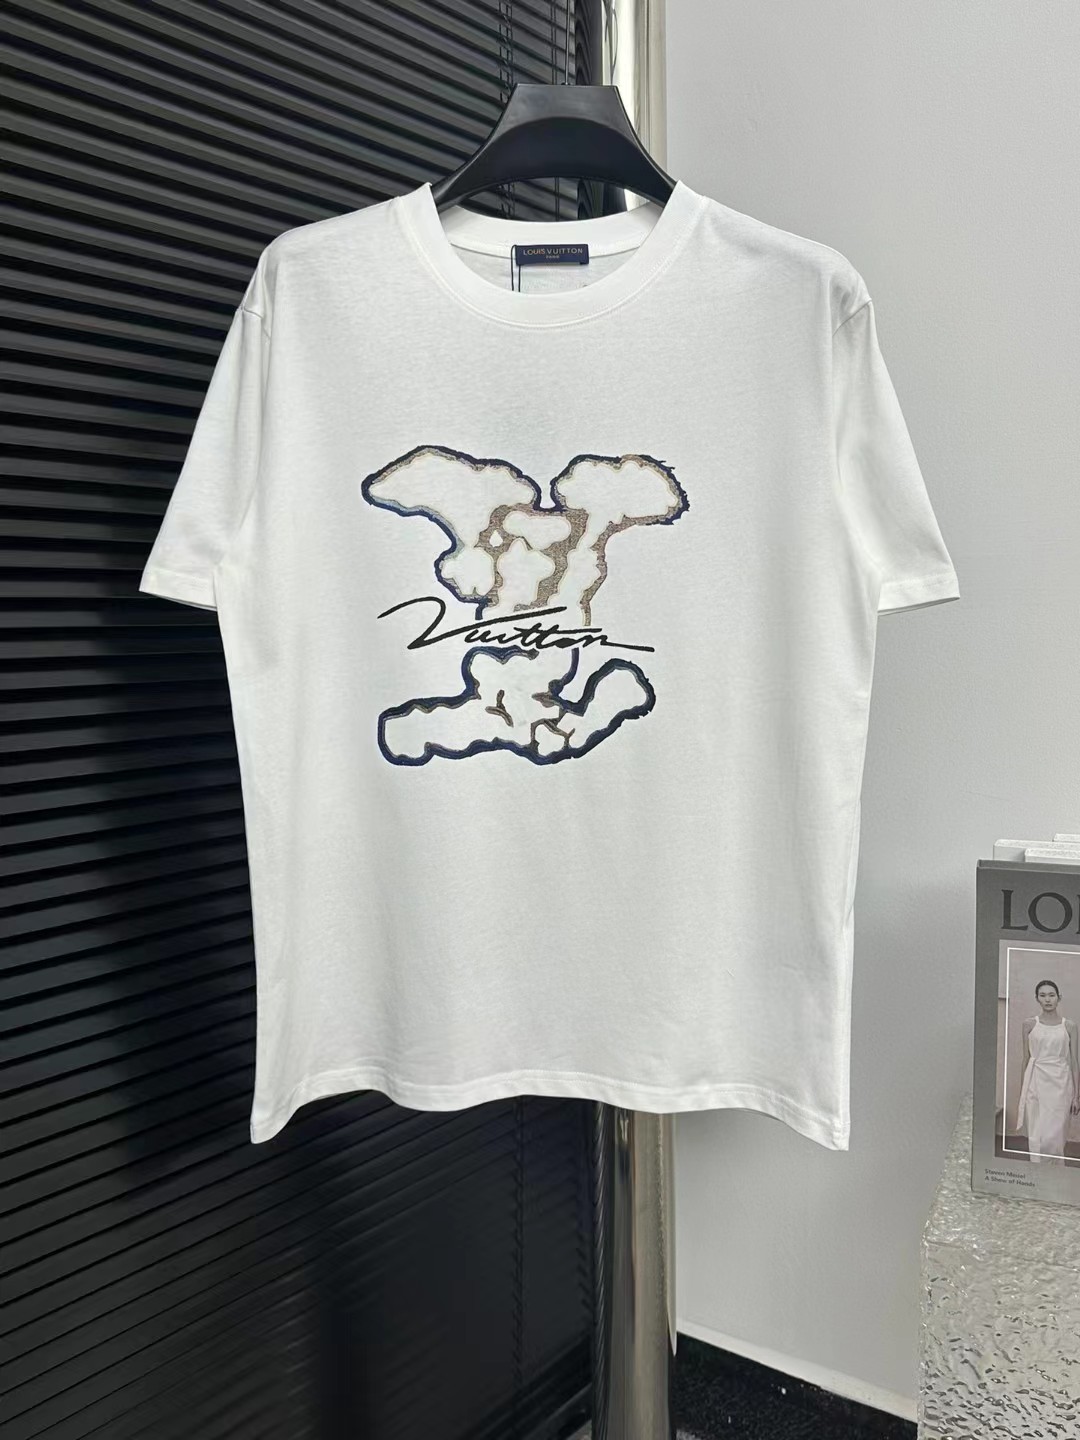 The Quality Replica
 Louis Vuitton Clothing T-Shirt Black White Printing Cotton Short Sleeve